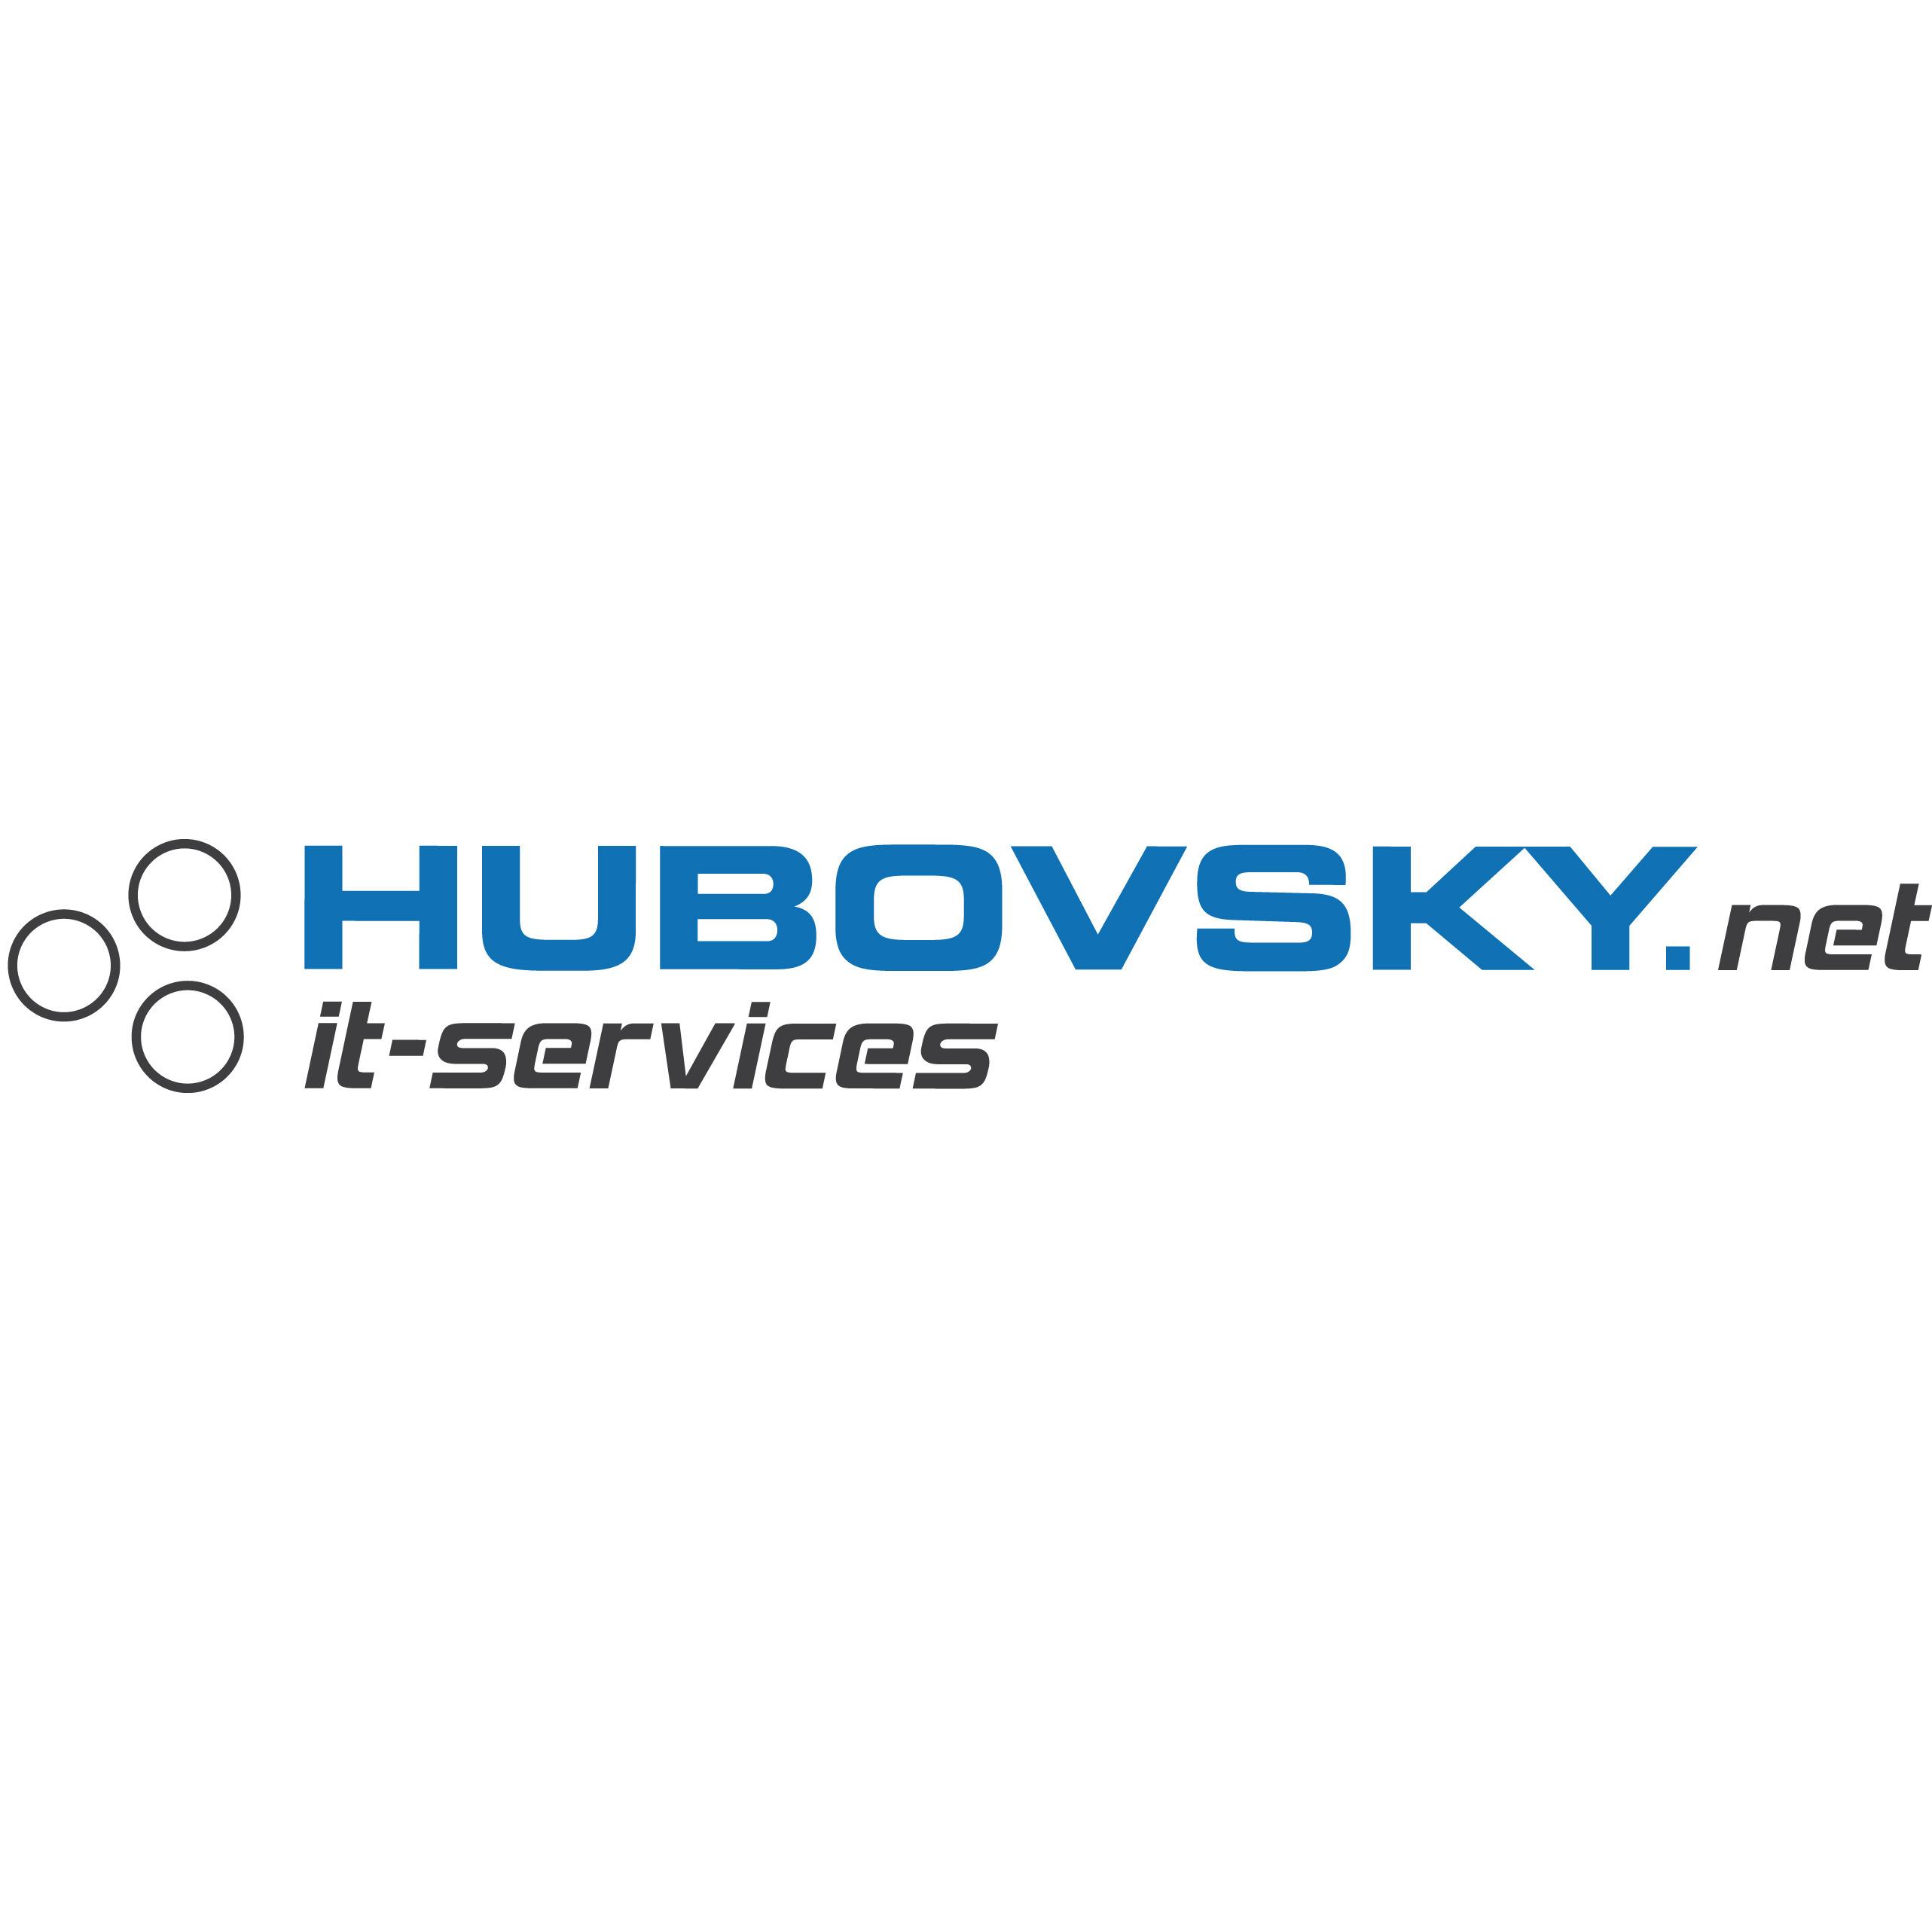 Hubovsky.net IT Services GmbH - Computer Service - Wien - 01 9460554 Austria | ShowMeLocal.com